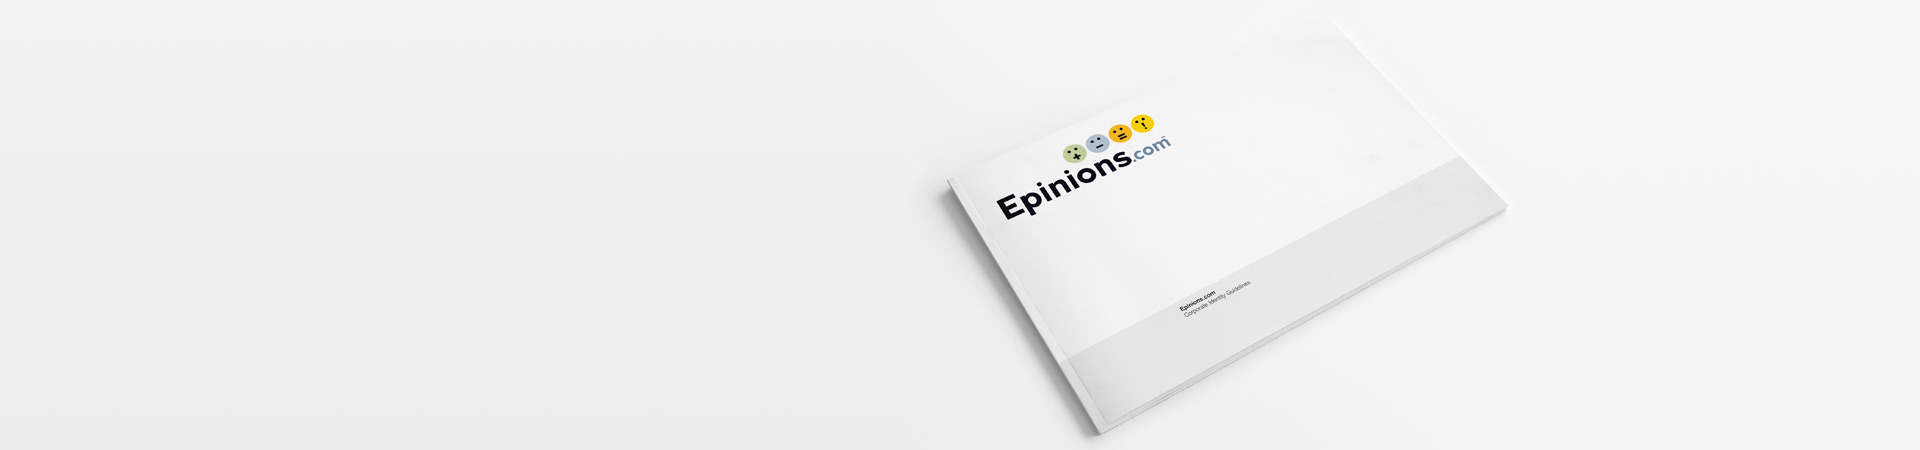 epinions-showcase